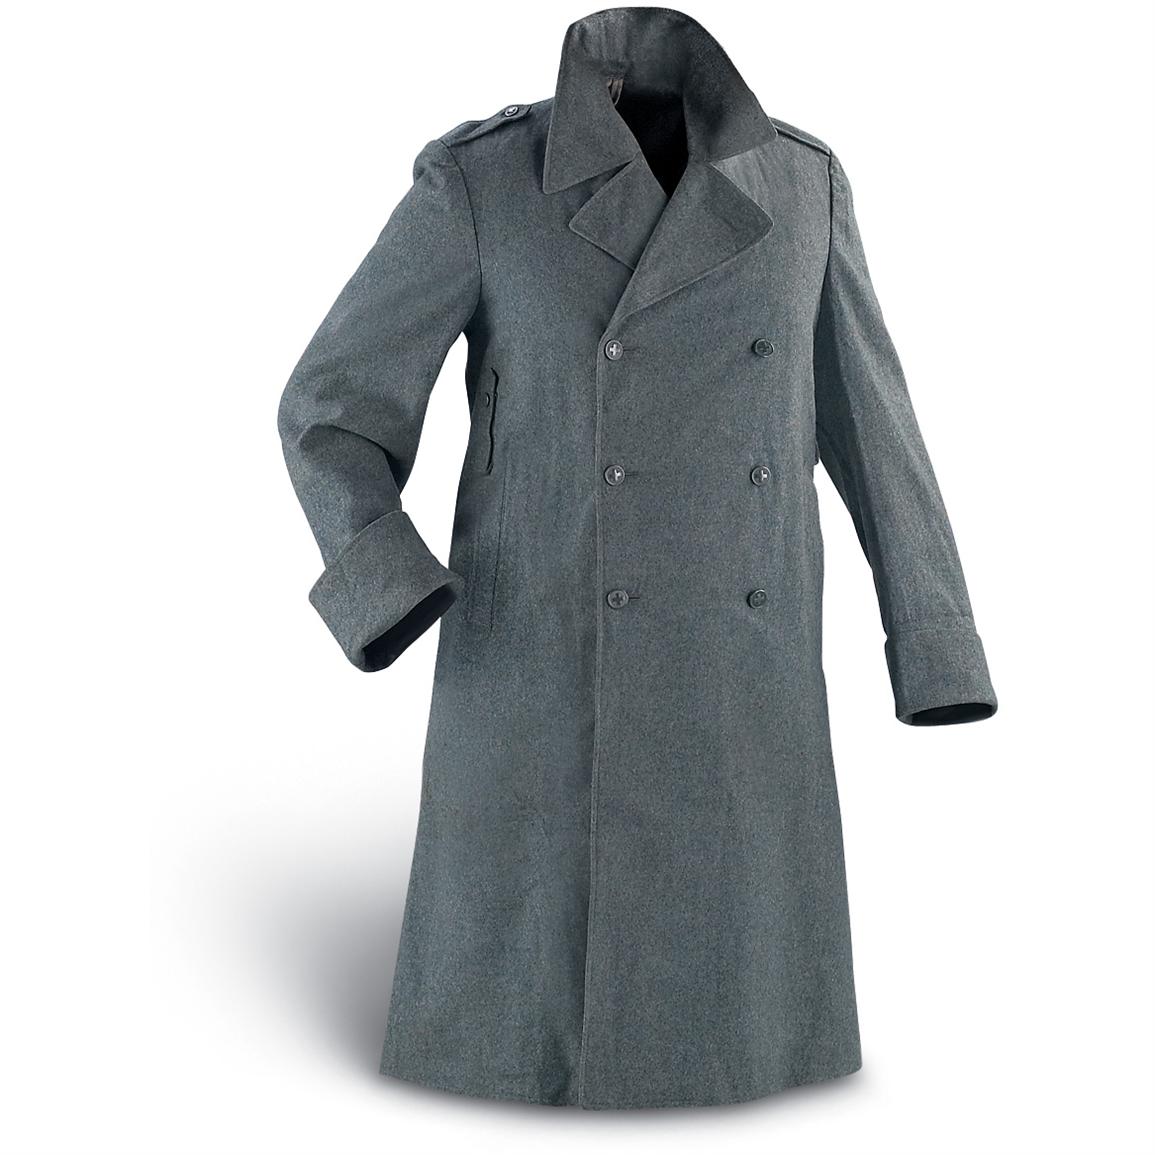 Used Swiss Mil. Virgin Wool Coat, Blue/Gray - 95457, at Sportsman's Guide